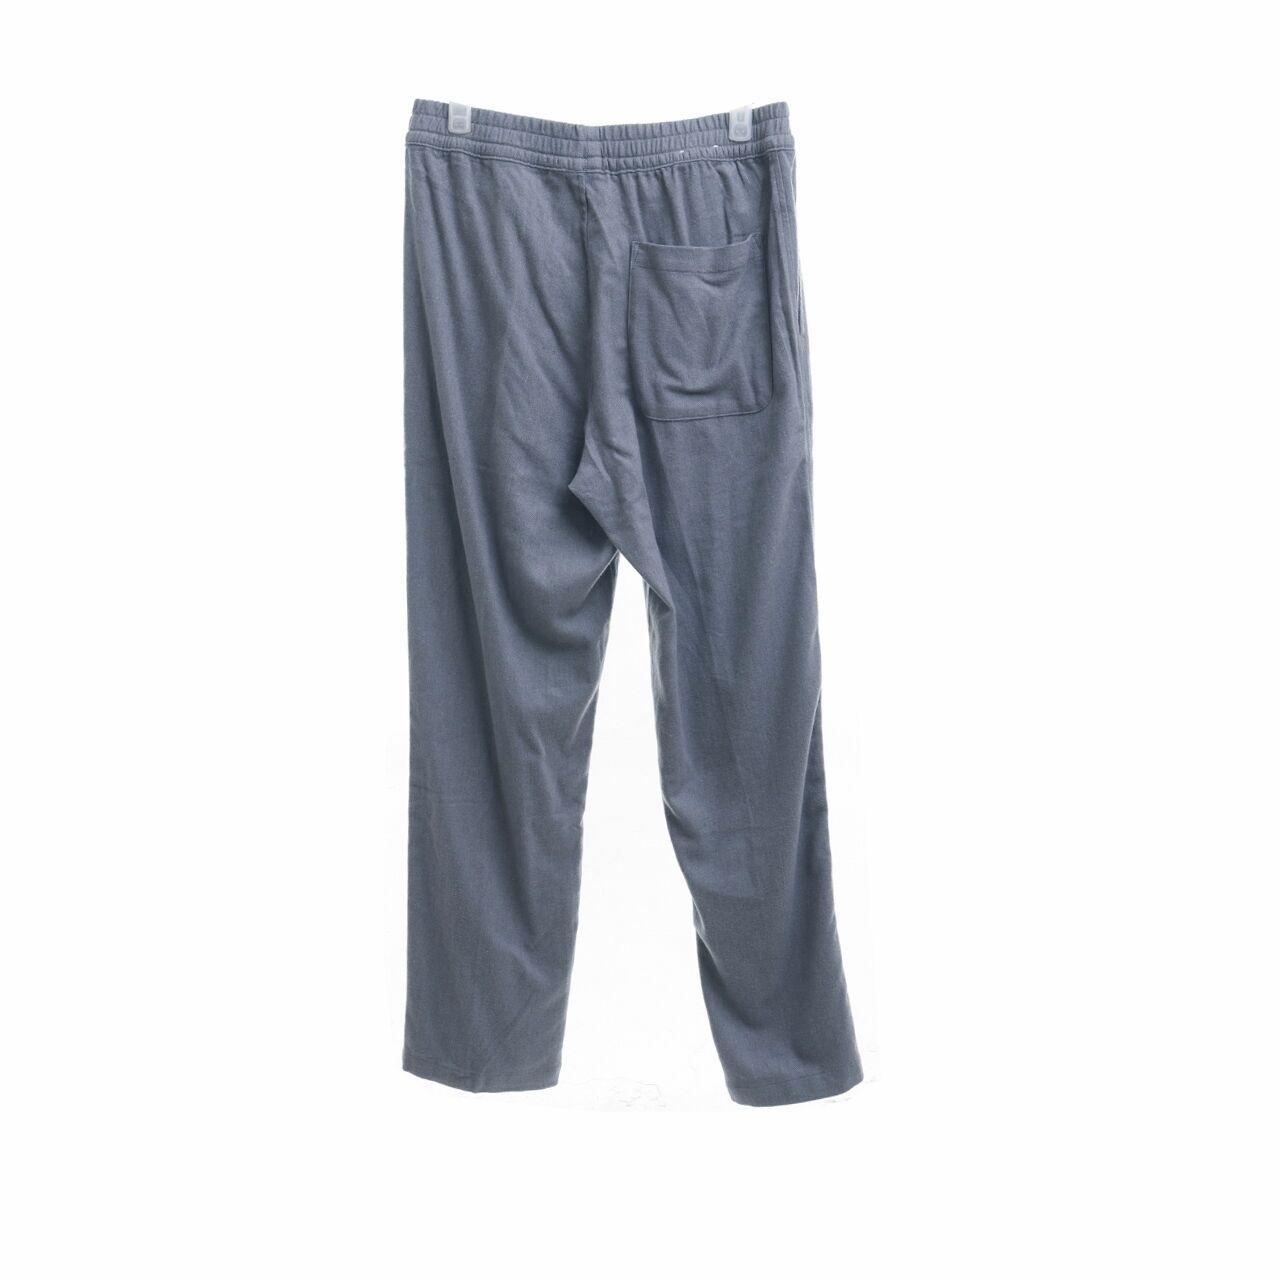 UNIQLO Grey Long Pants